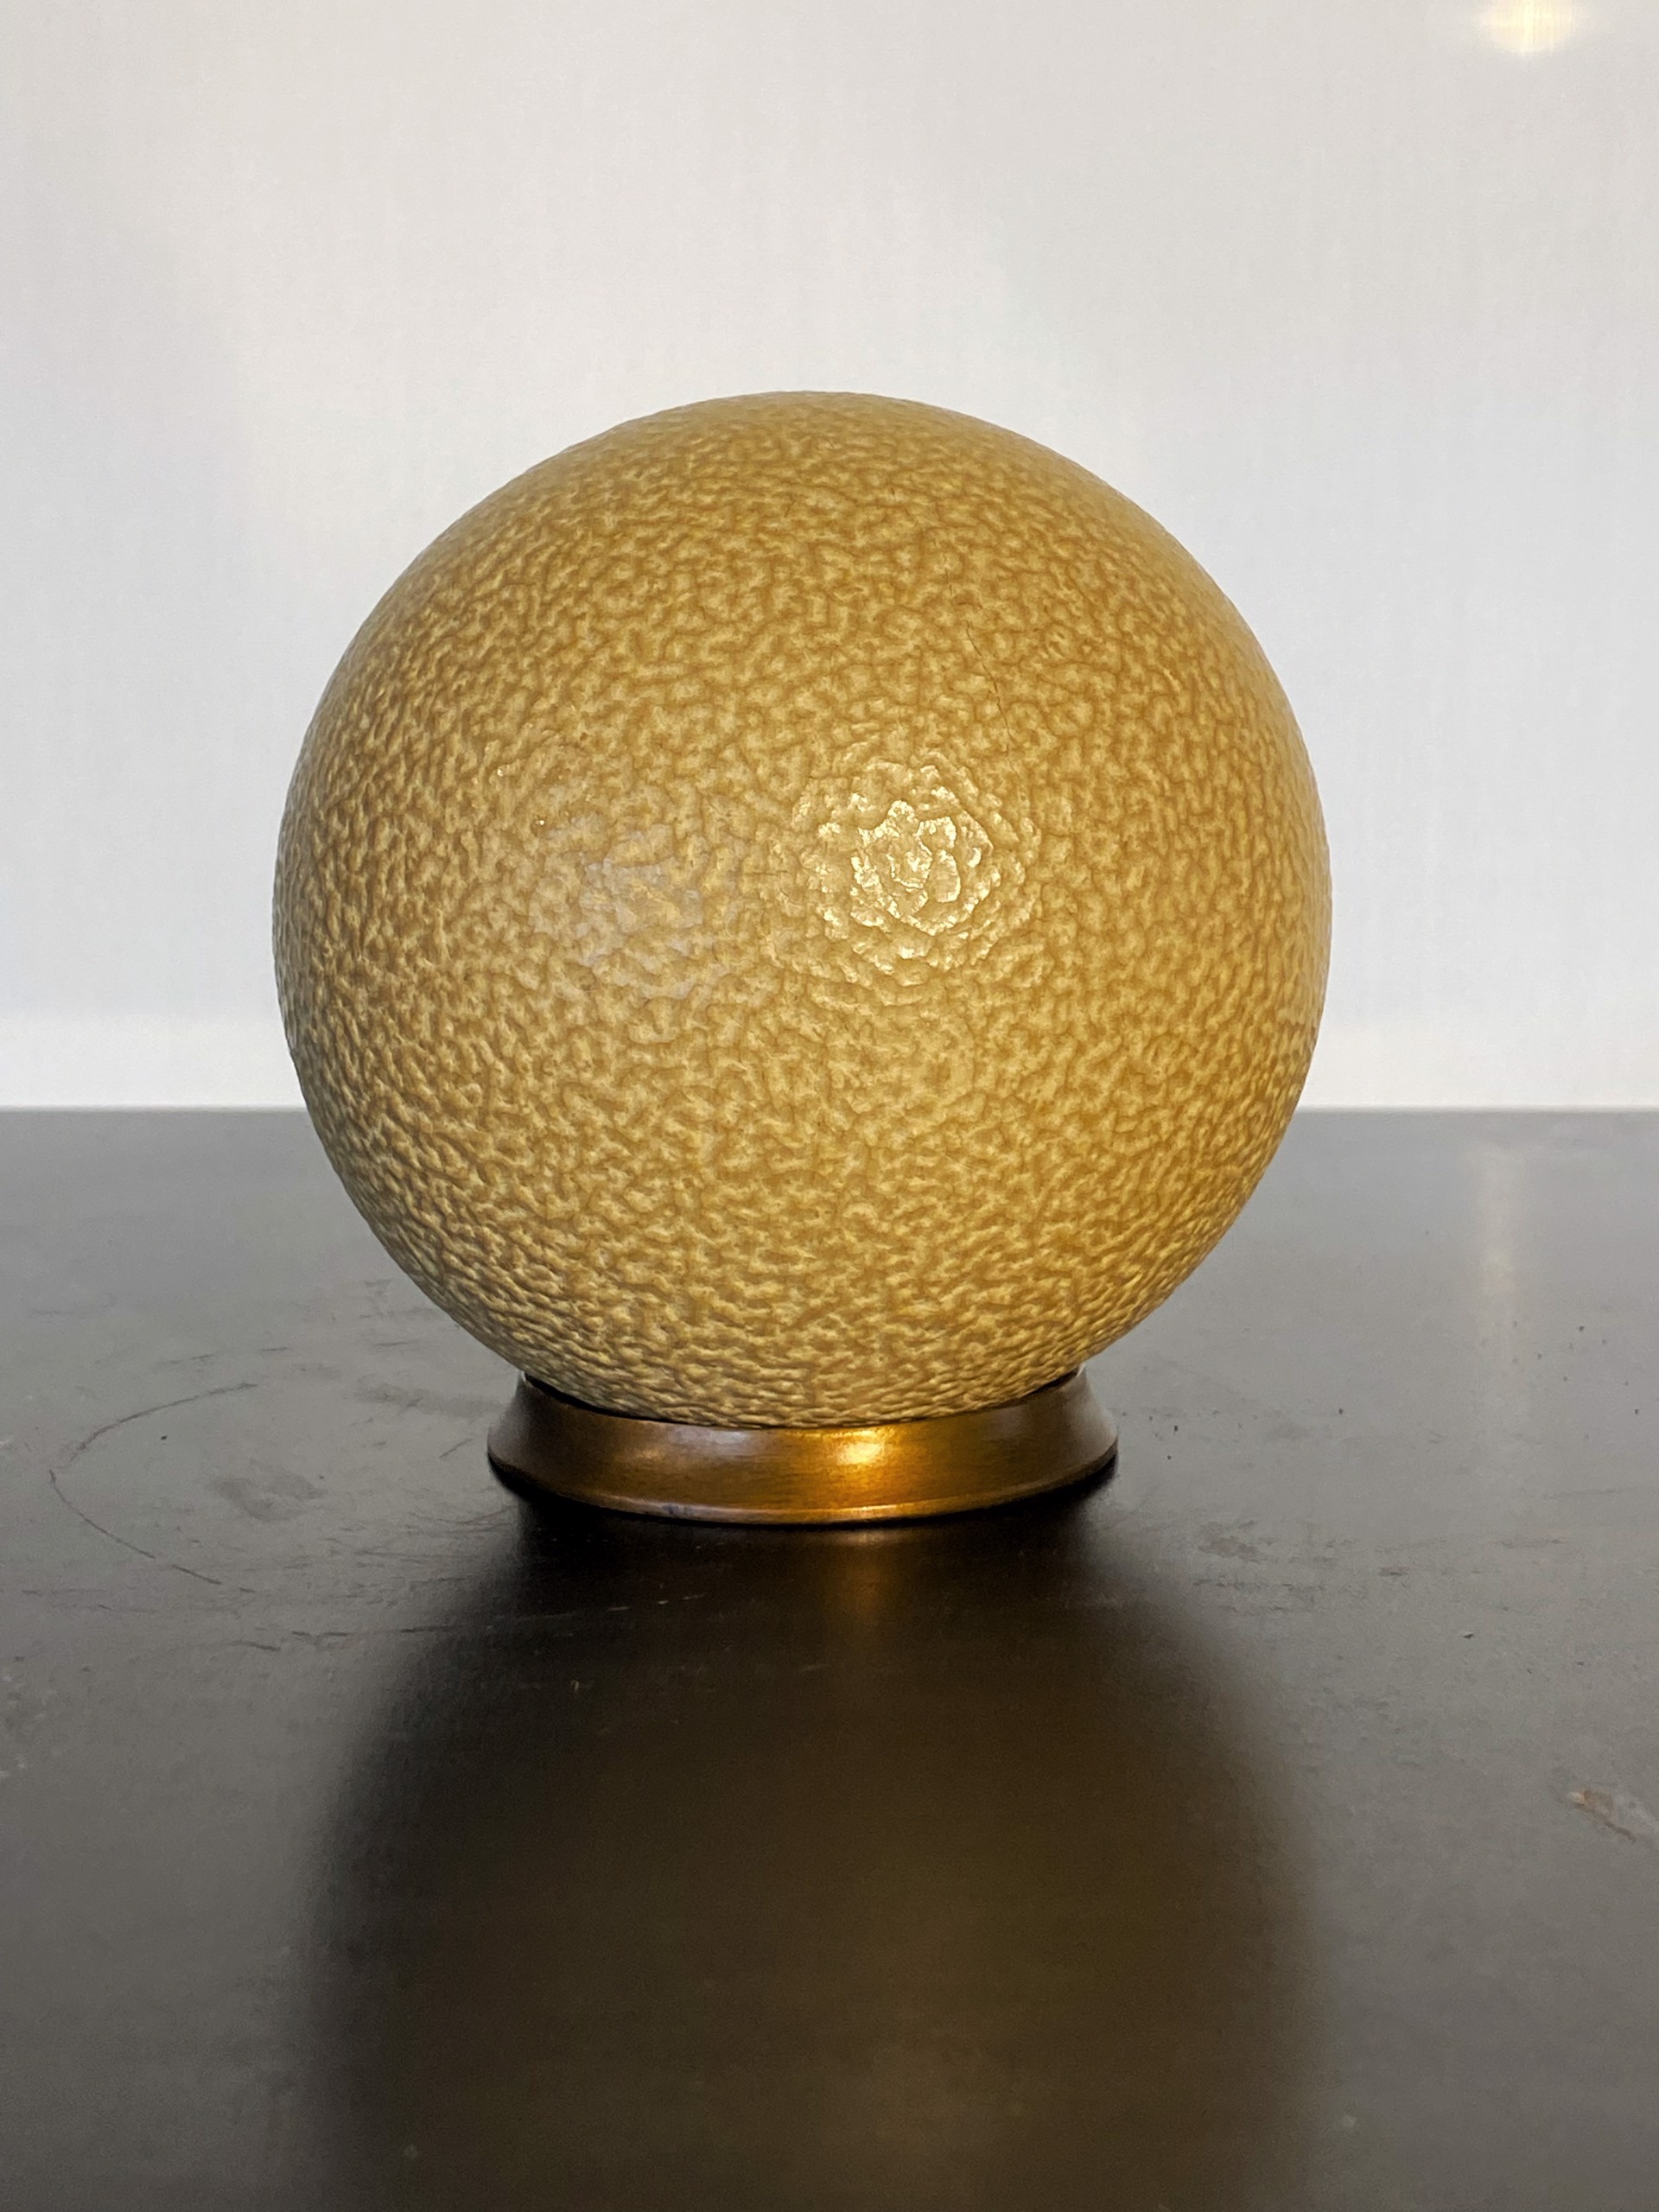 Earth Sphere #4 by Bruce Gardner